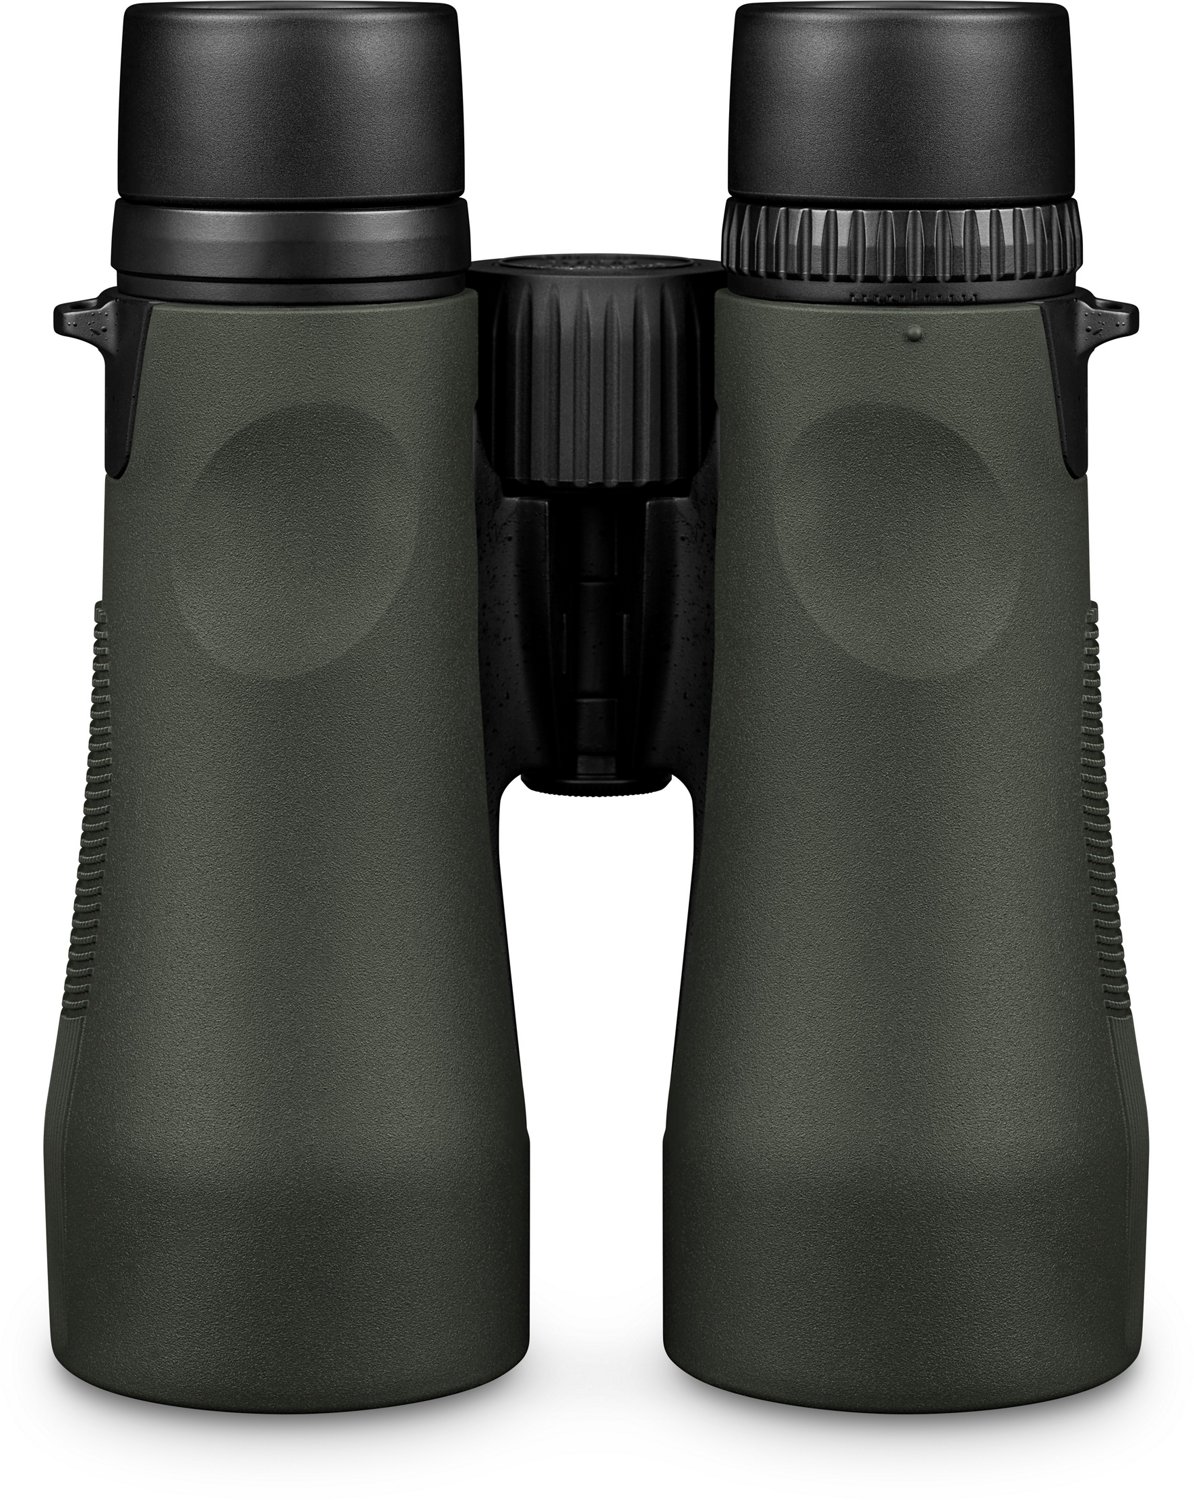 Vortex Diamondback HD 10 x 50 Binoculars                                                                                         - view number 4